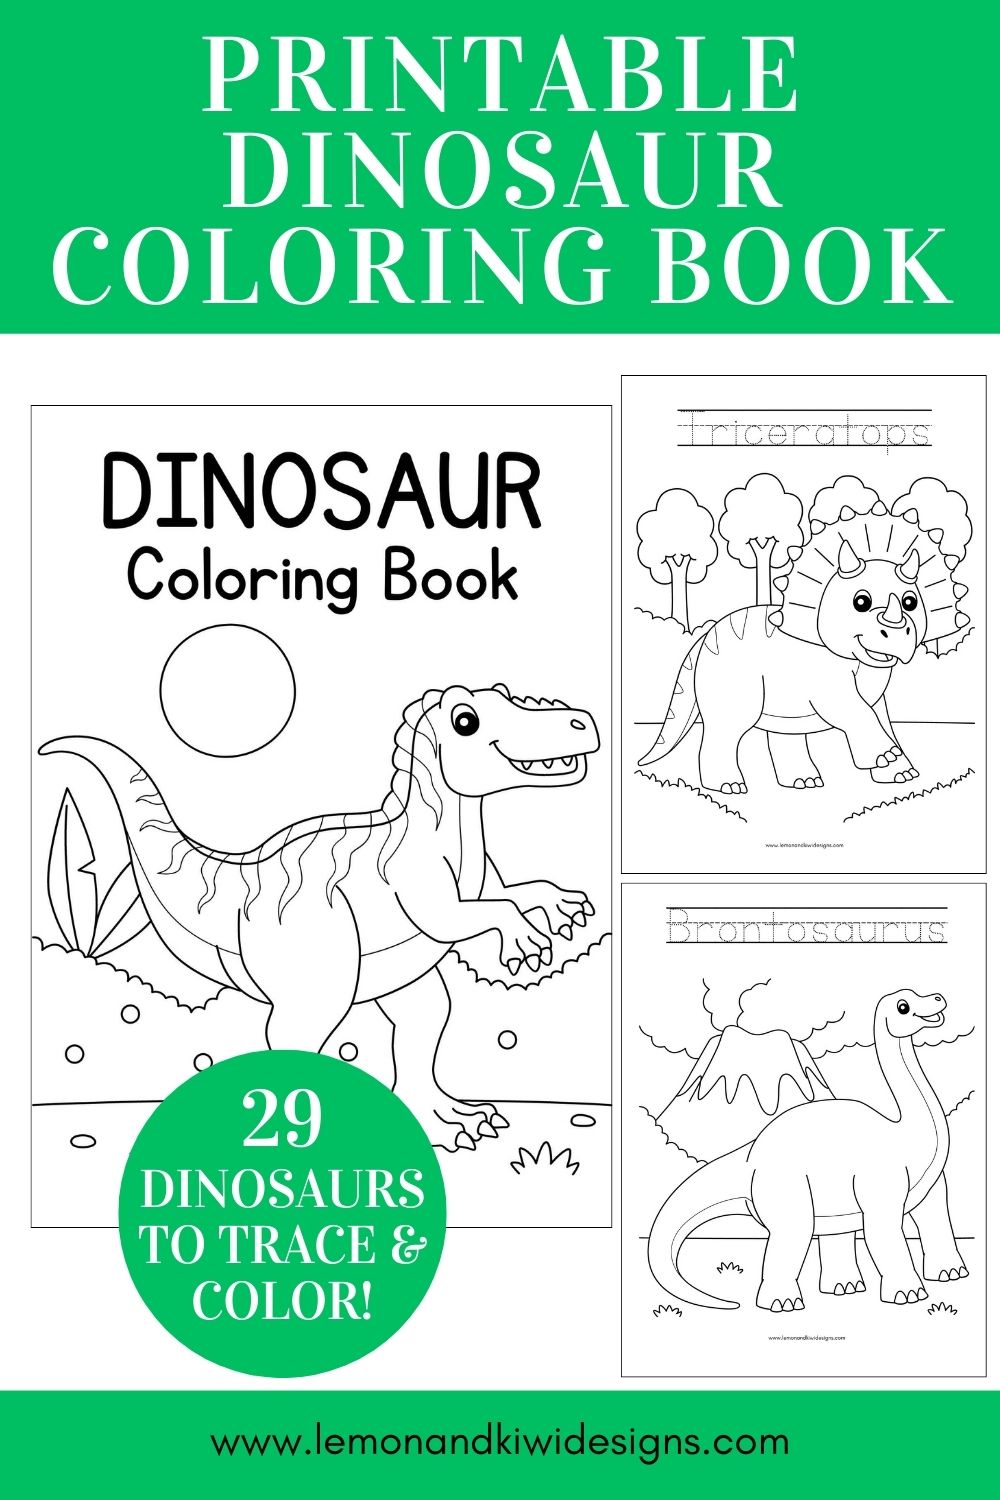 Printable Dinosaur Coloring Book (29 Dinosaur Coloring Pages)